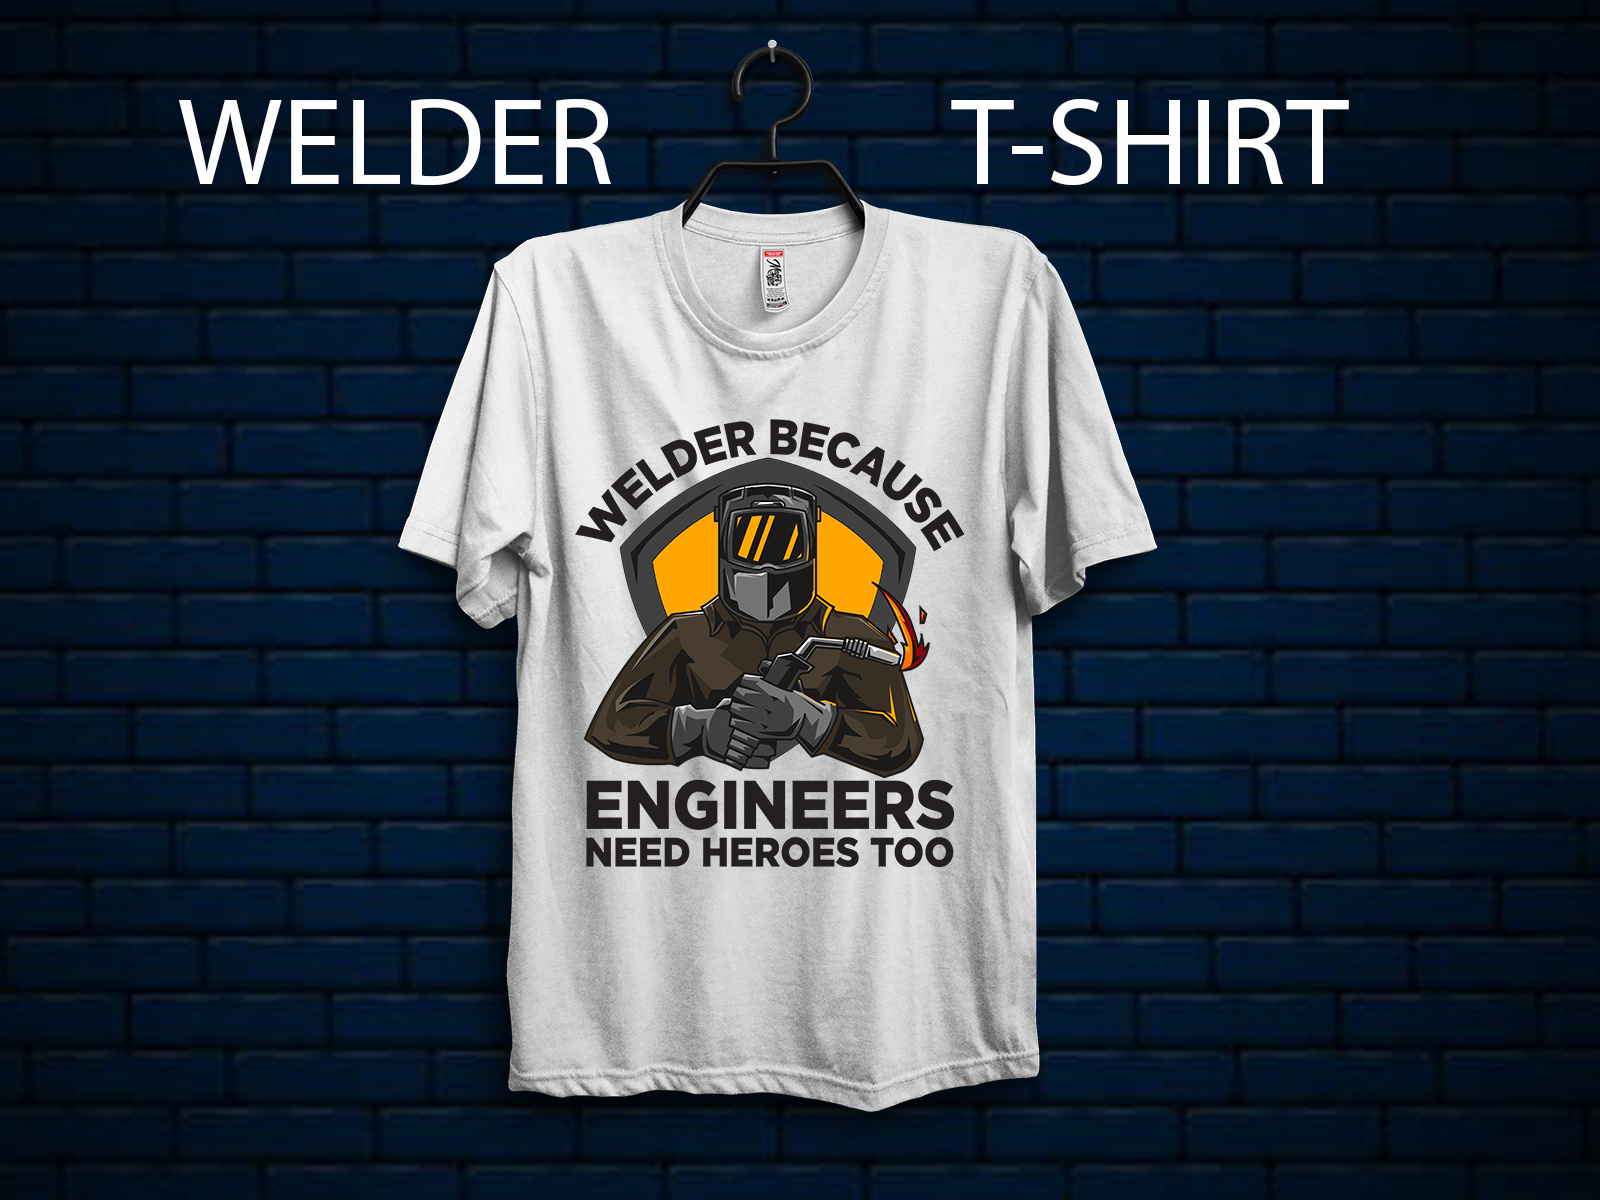 Welder T-shirt Design by Jehan Isteaq on Dribbble